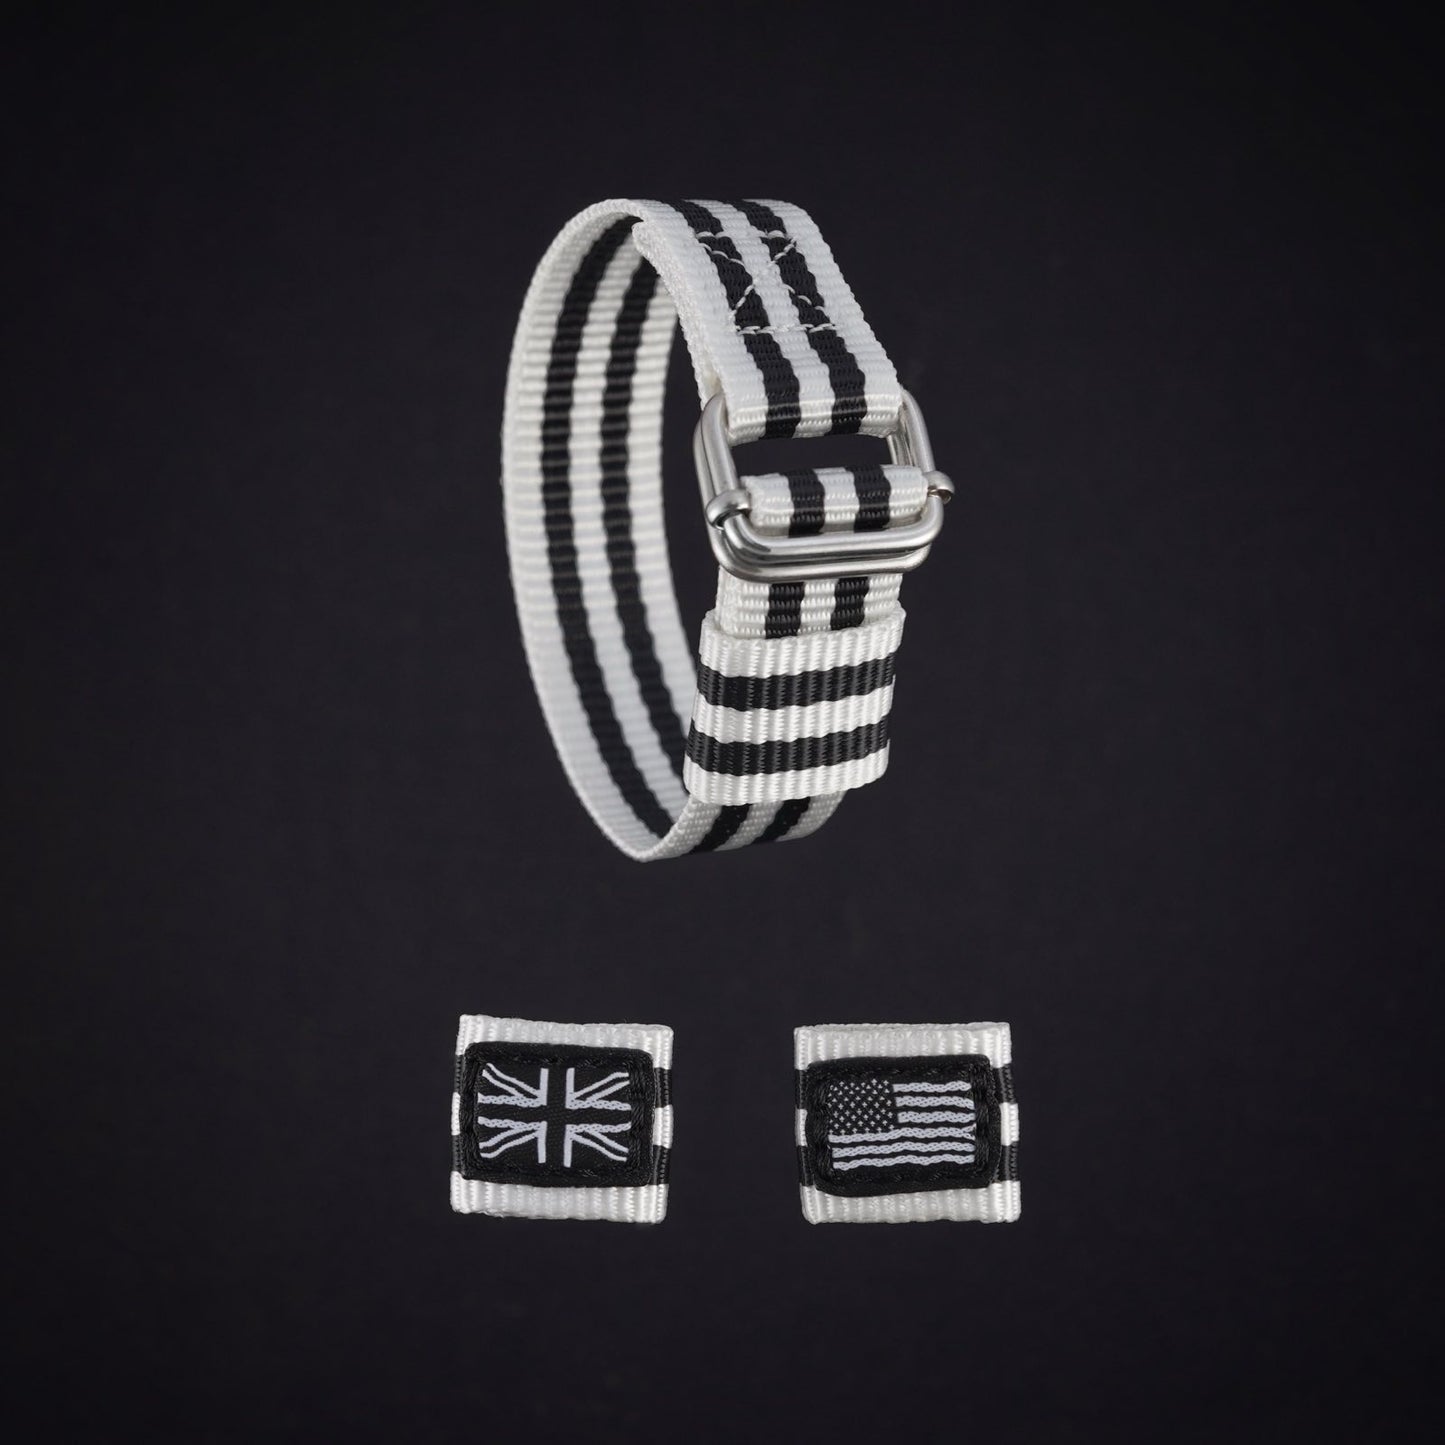 White military strap with black strip